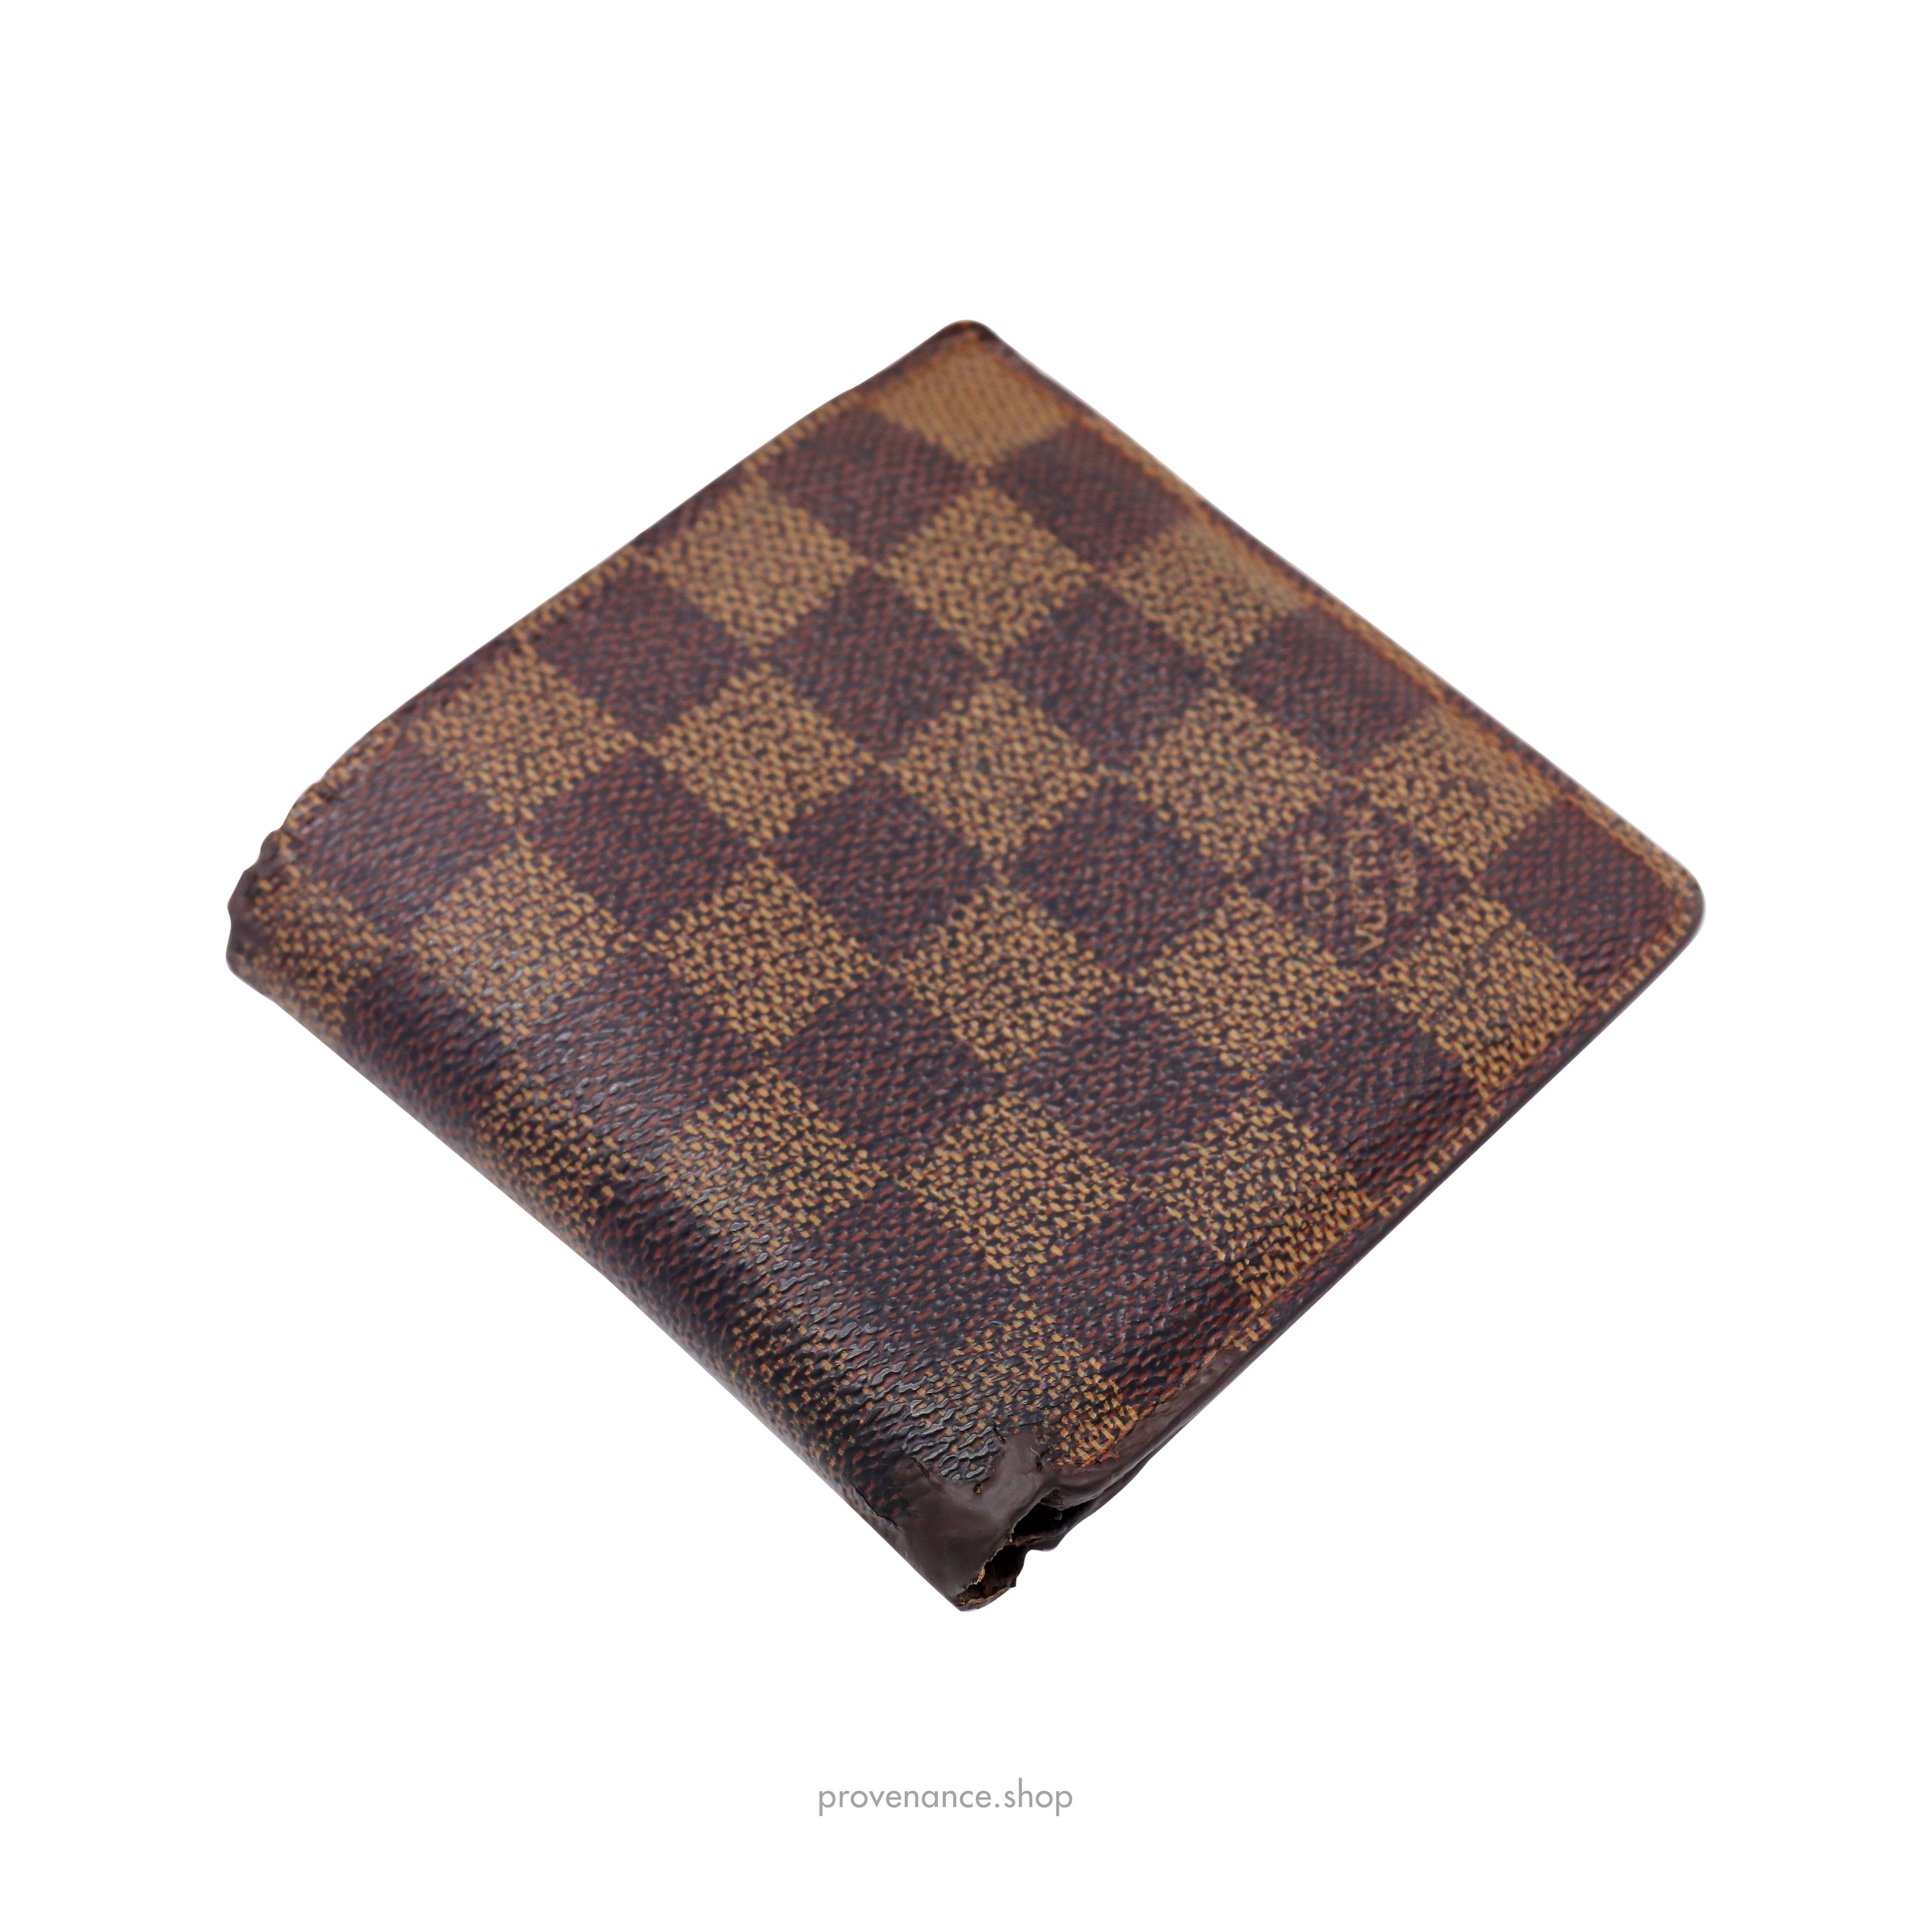 Louis Vuitton Brown Damier Ebene Saffiano Leather Trifold Wallet Authentic